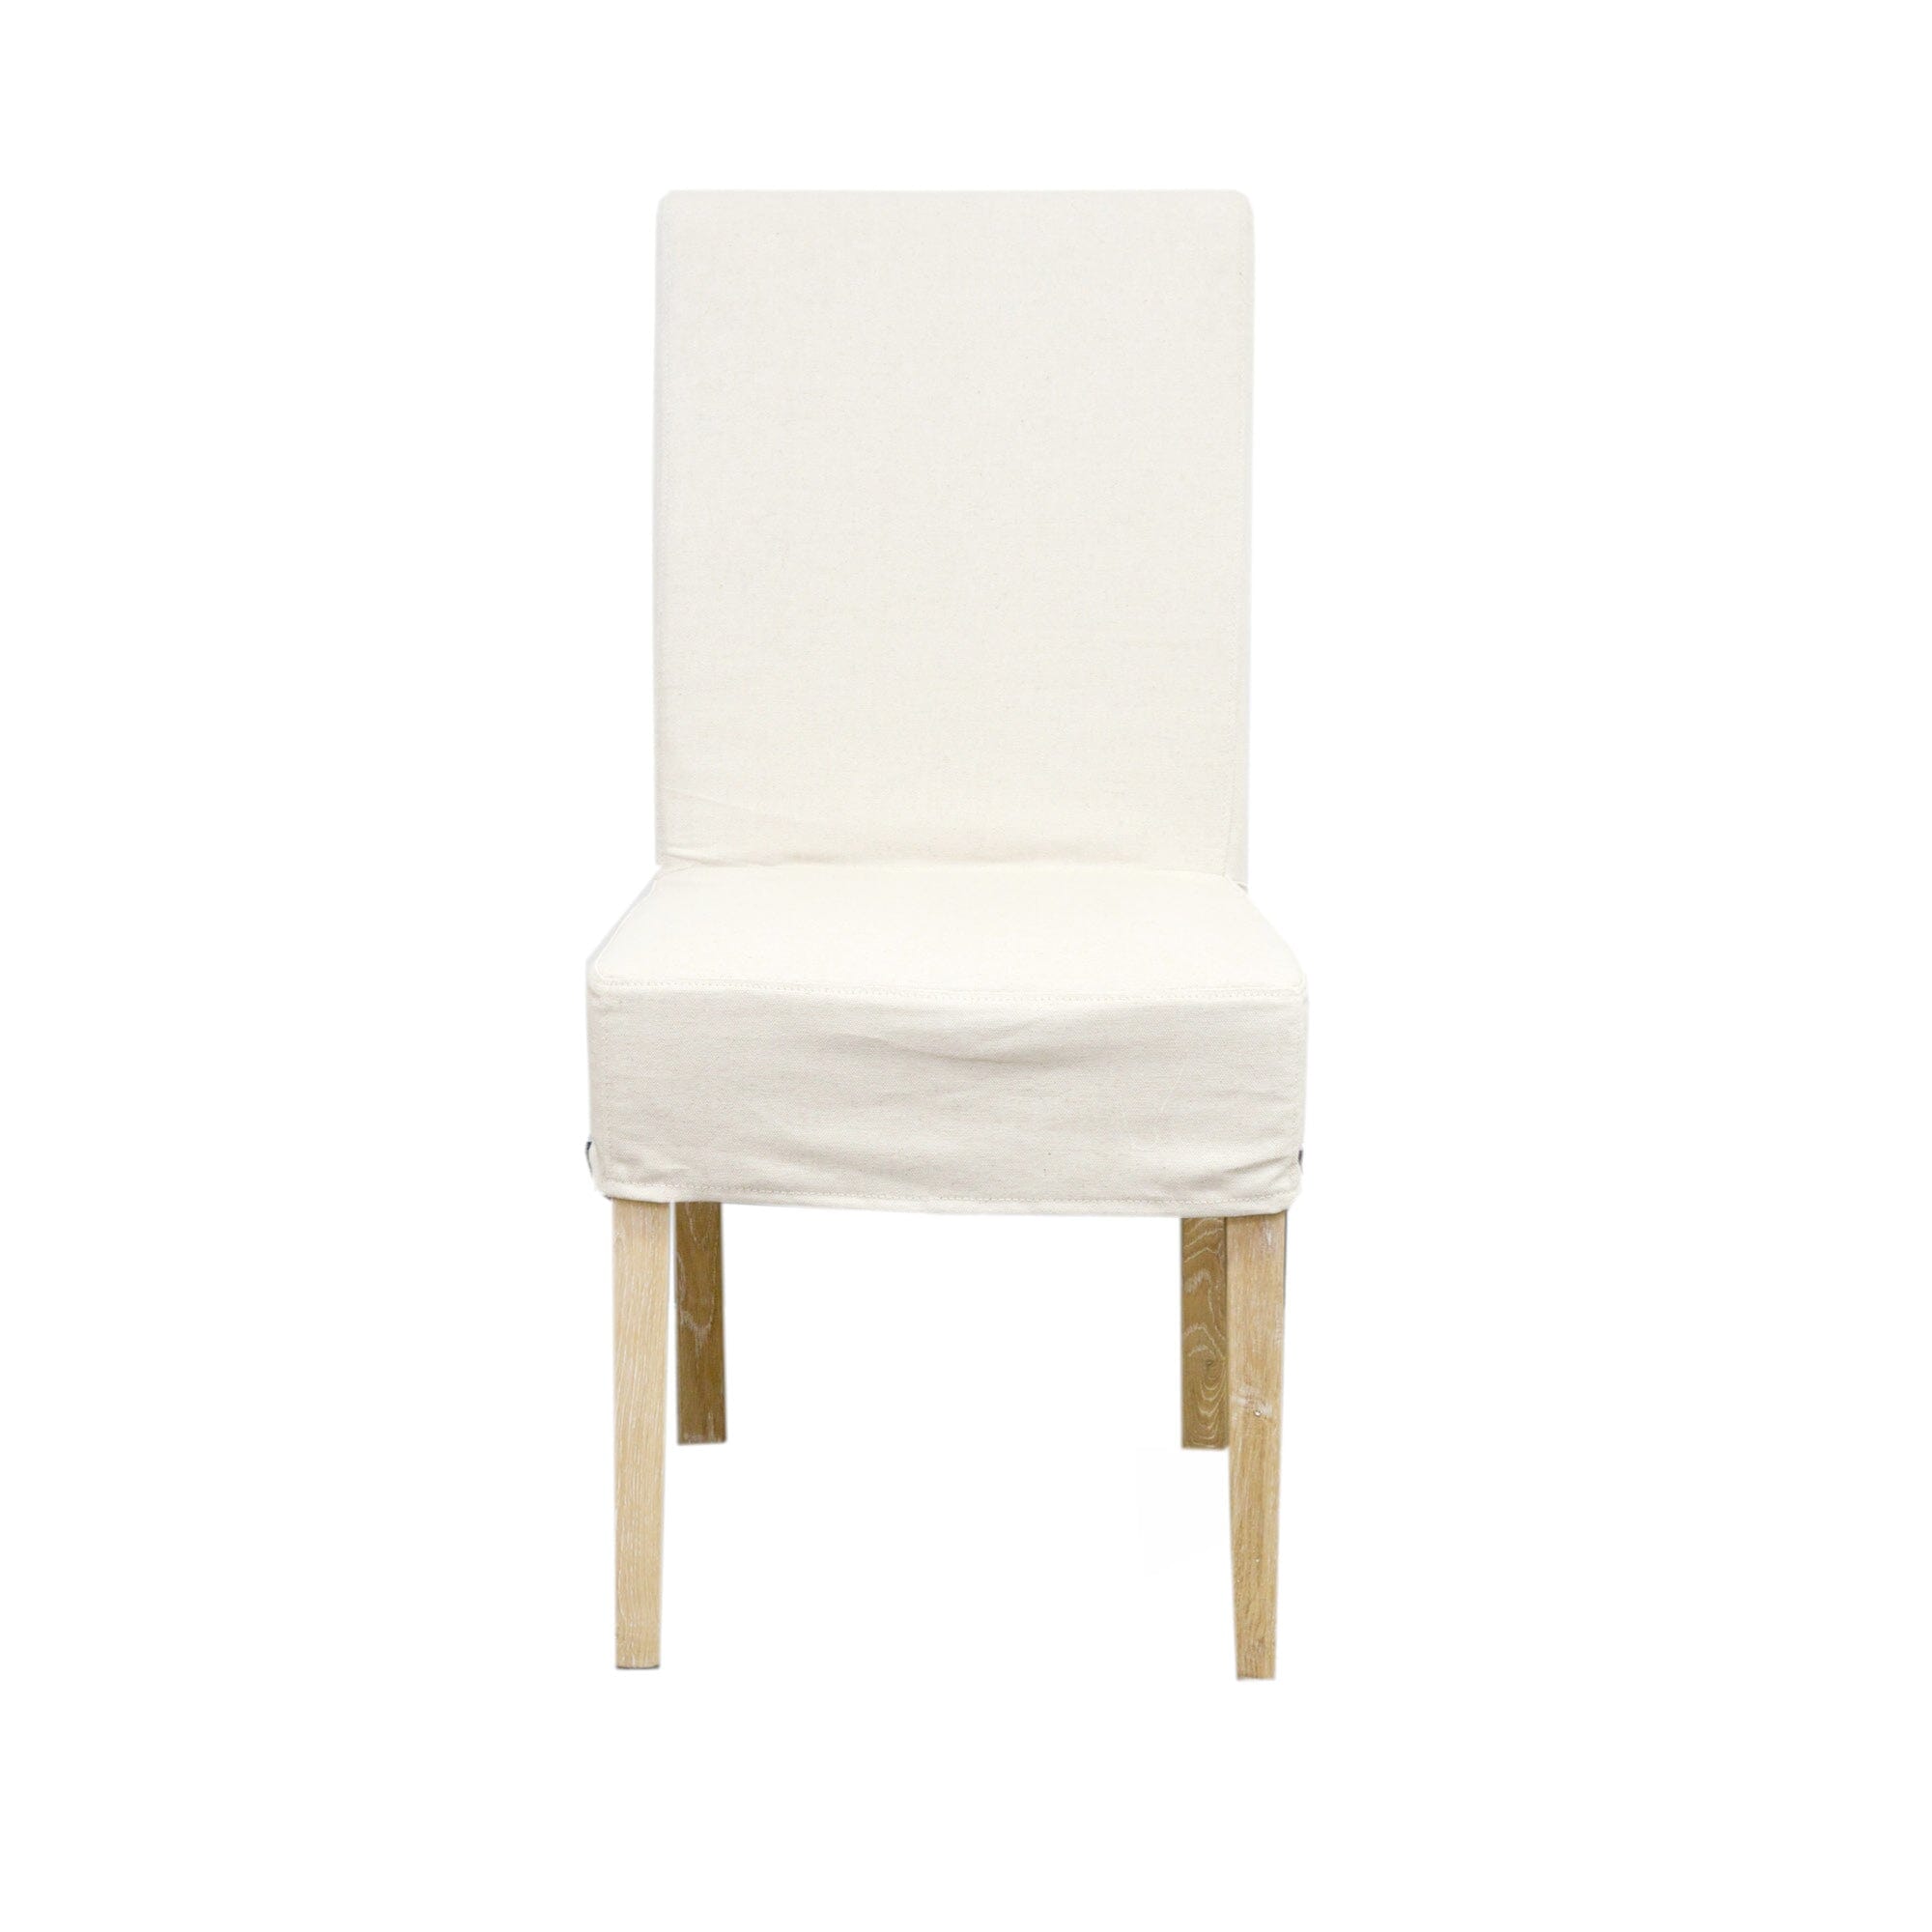 Collaroy High Back Chair Dining Furniture Beachwood Designs Salt &amp; Pepper Linen Cotton 